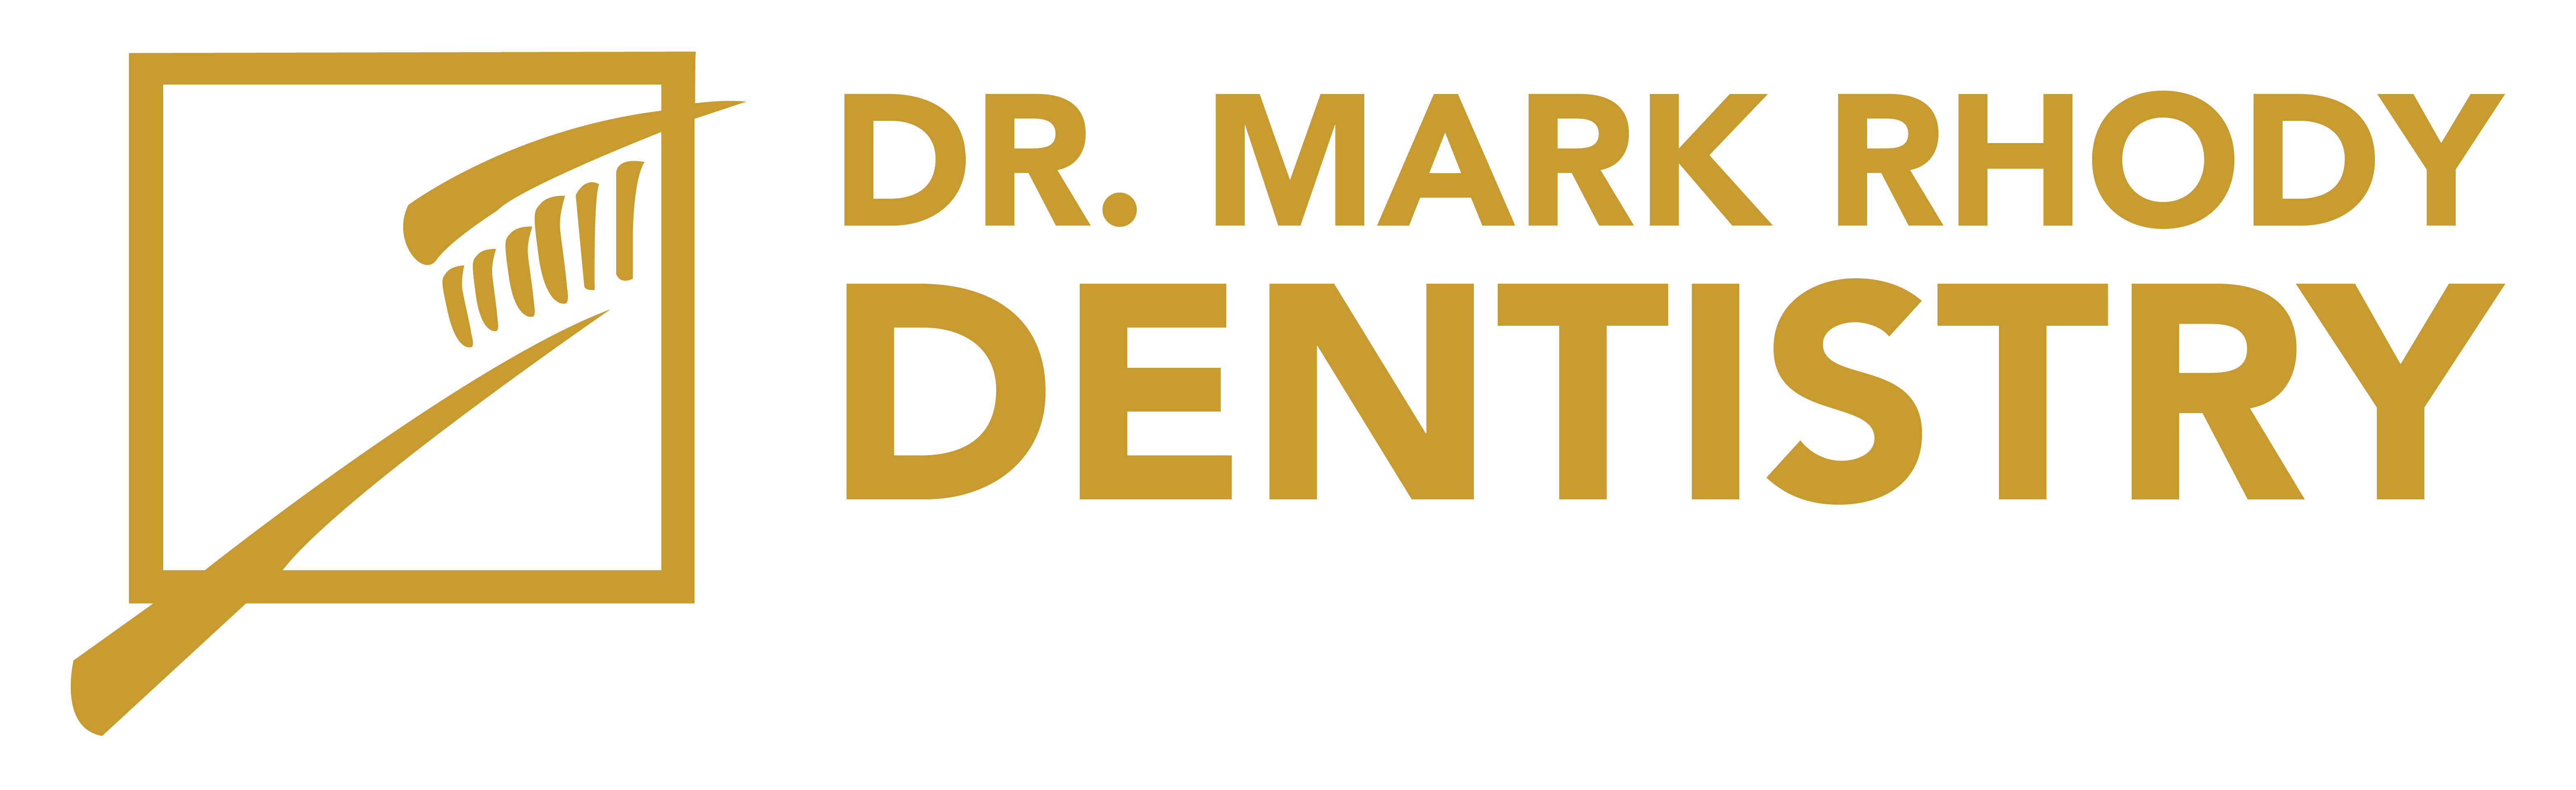 Dr Mark Rhody Logo White Tagline Text-01